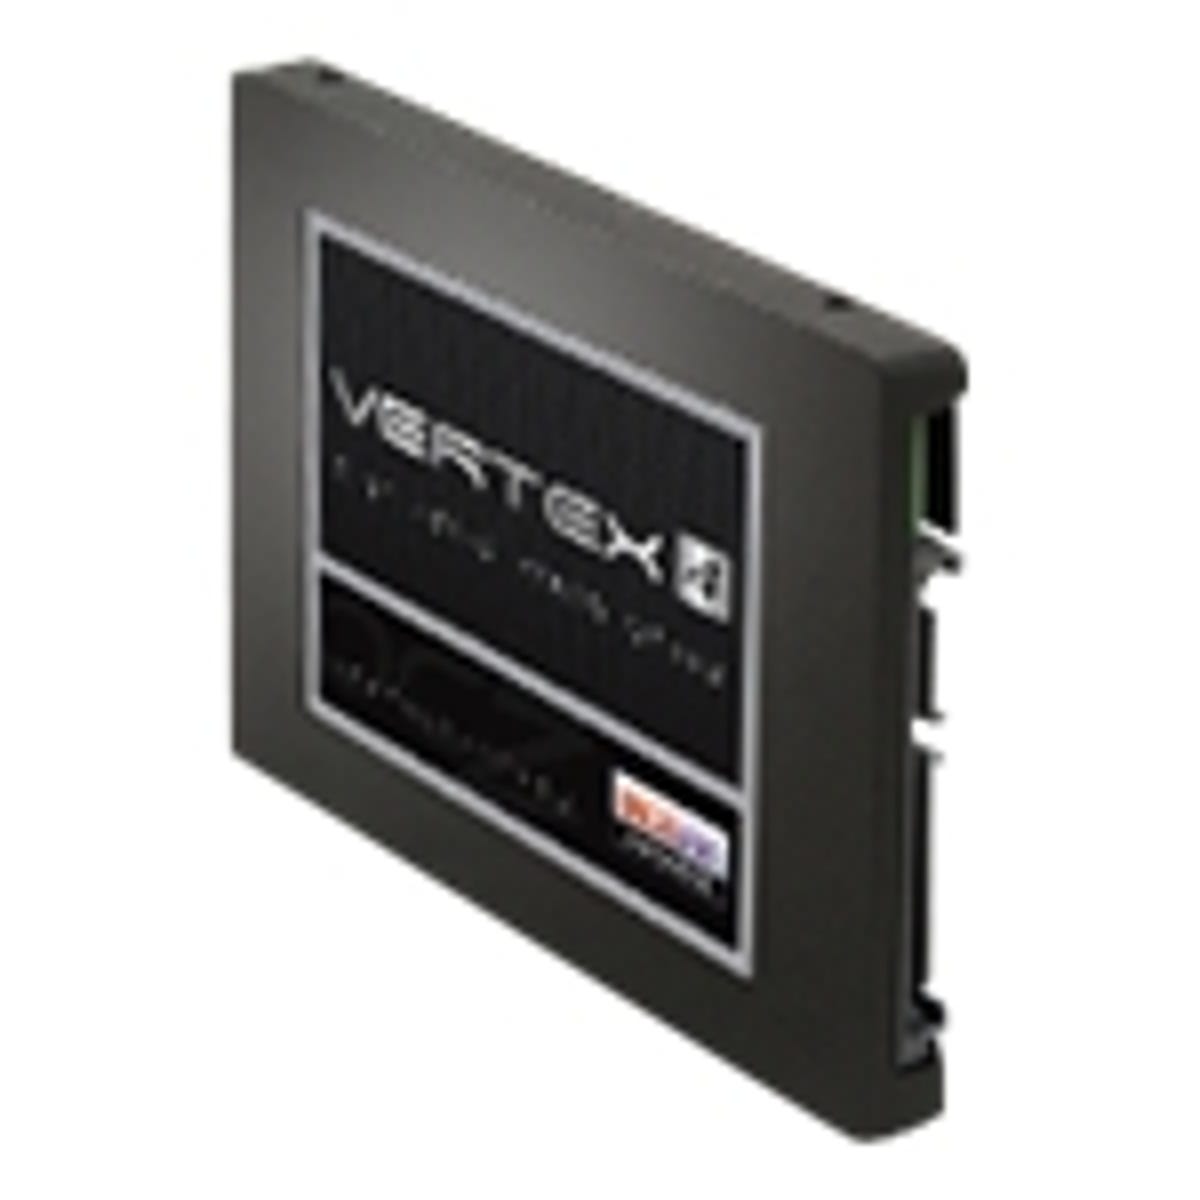 OCZ Vertex SSD OCZ 4 SSD CNET